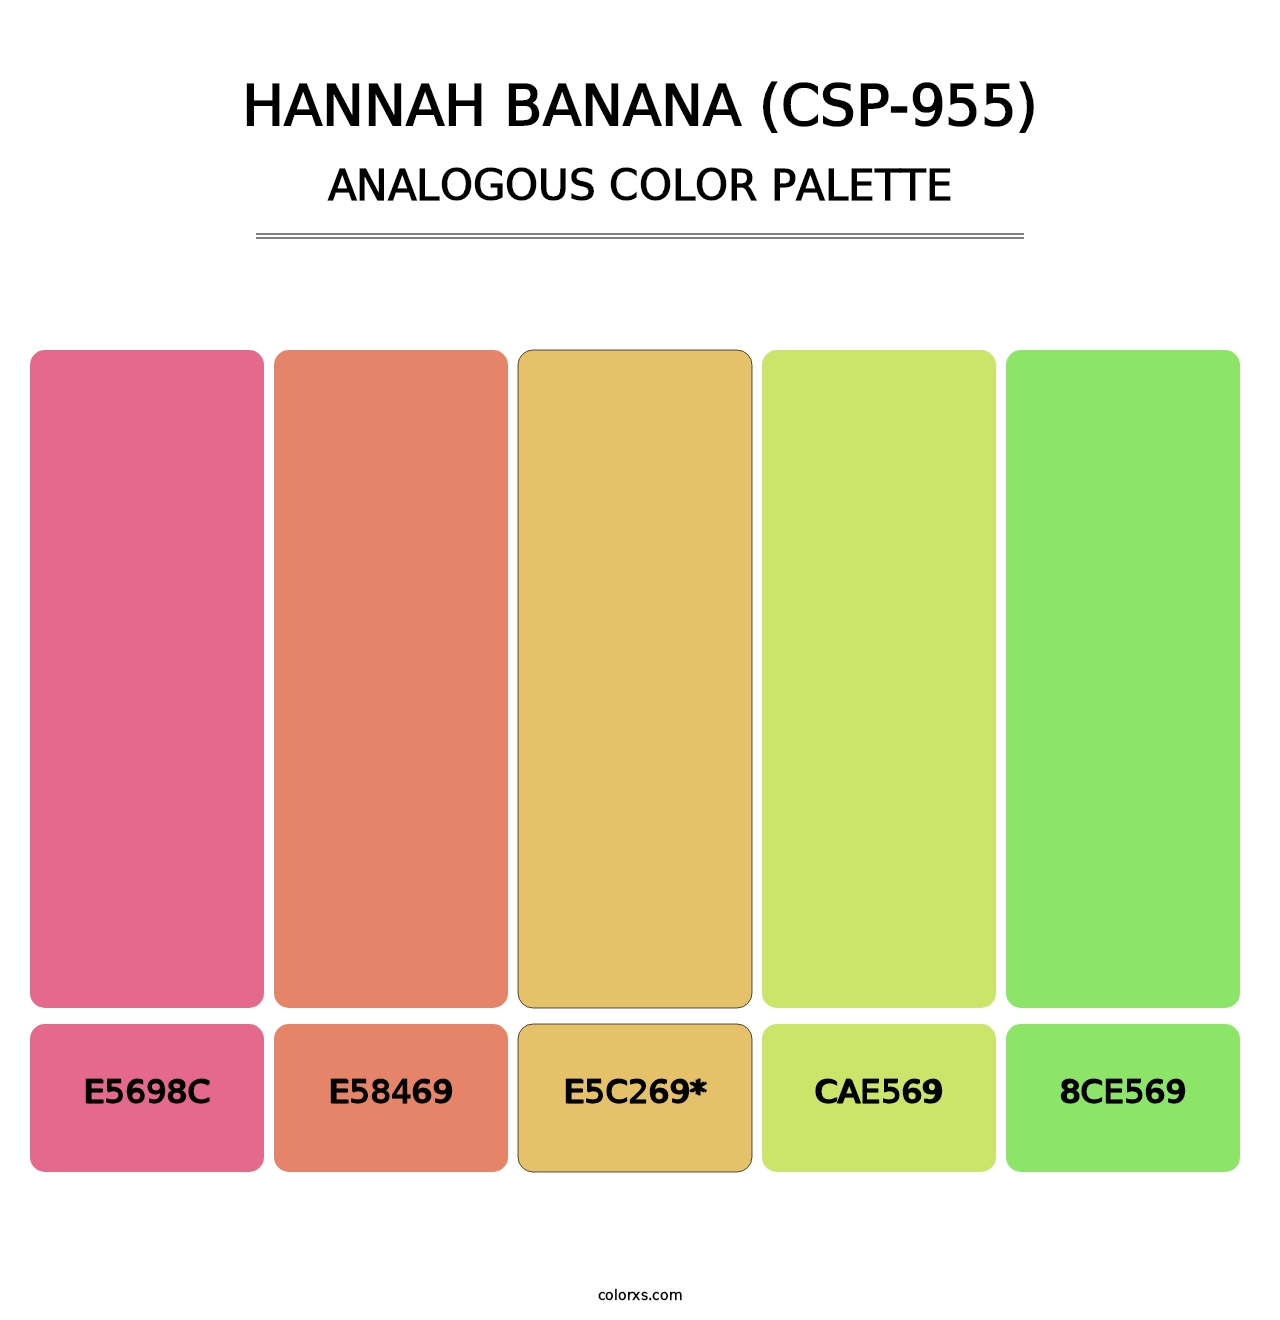 Hannah Banana (CSP-955) - Analogous Color Palette